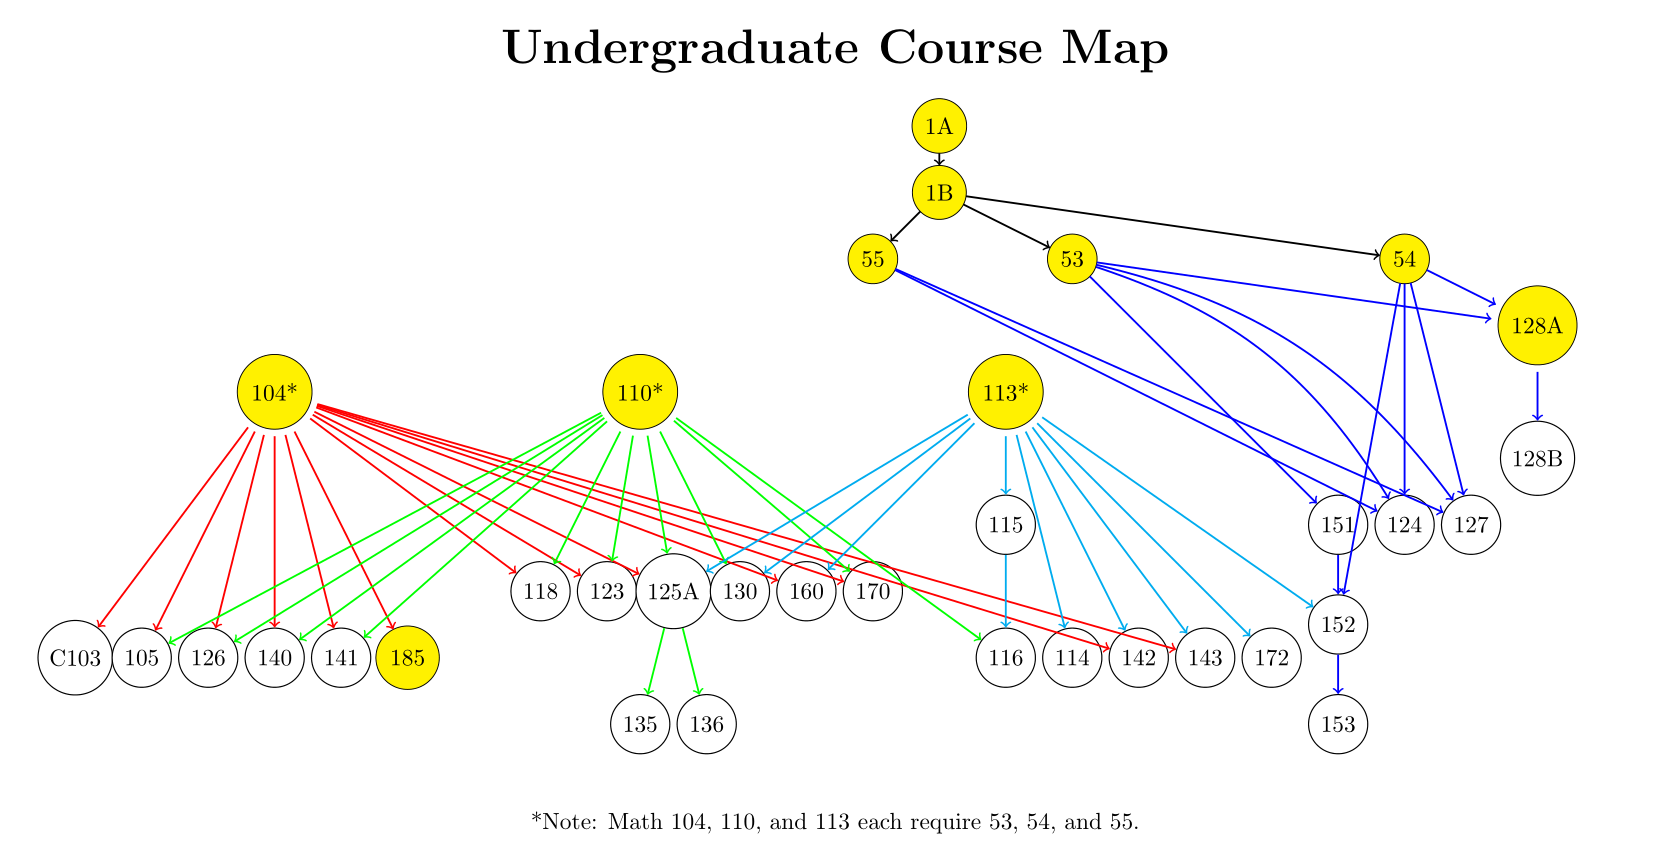 Static Undergraduate Course Map